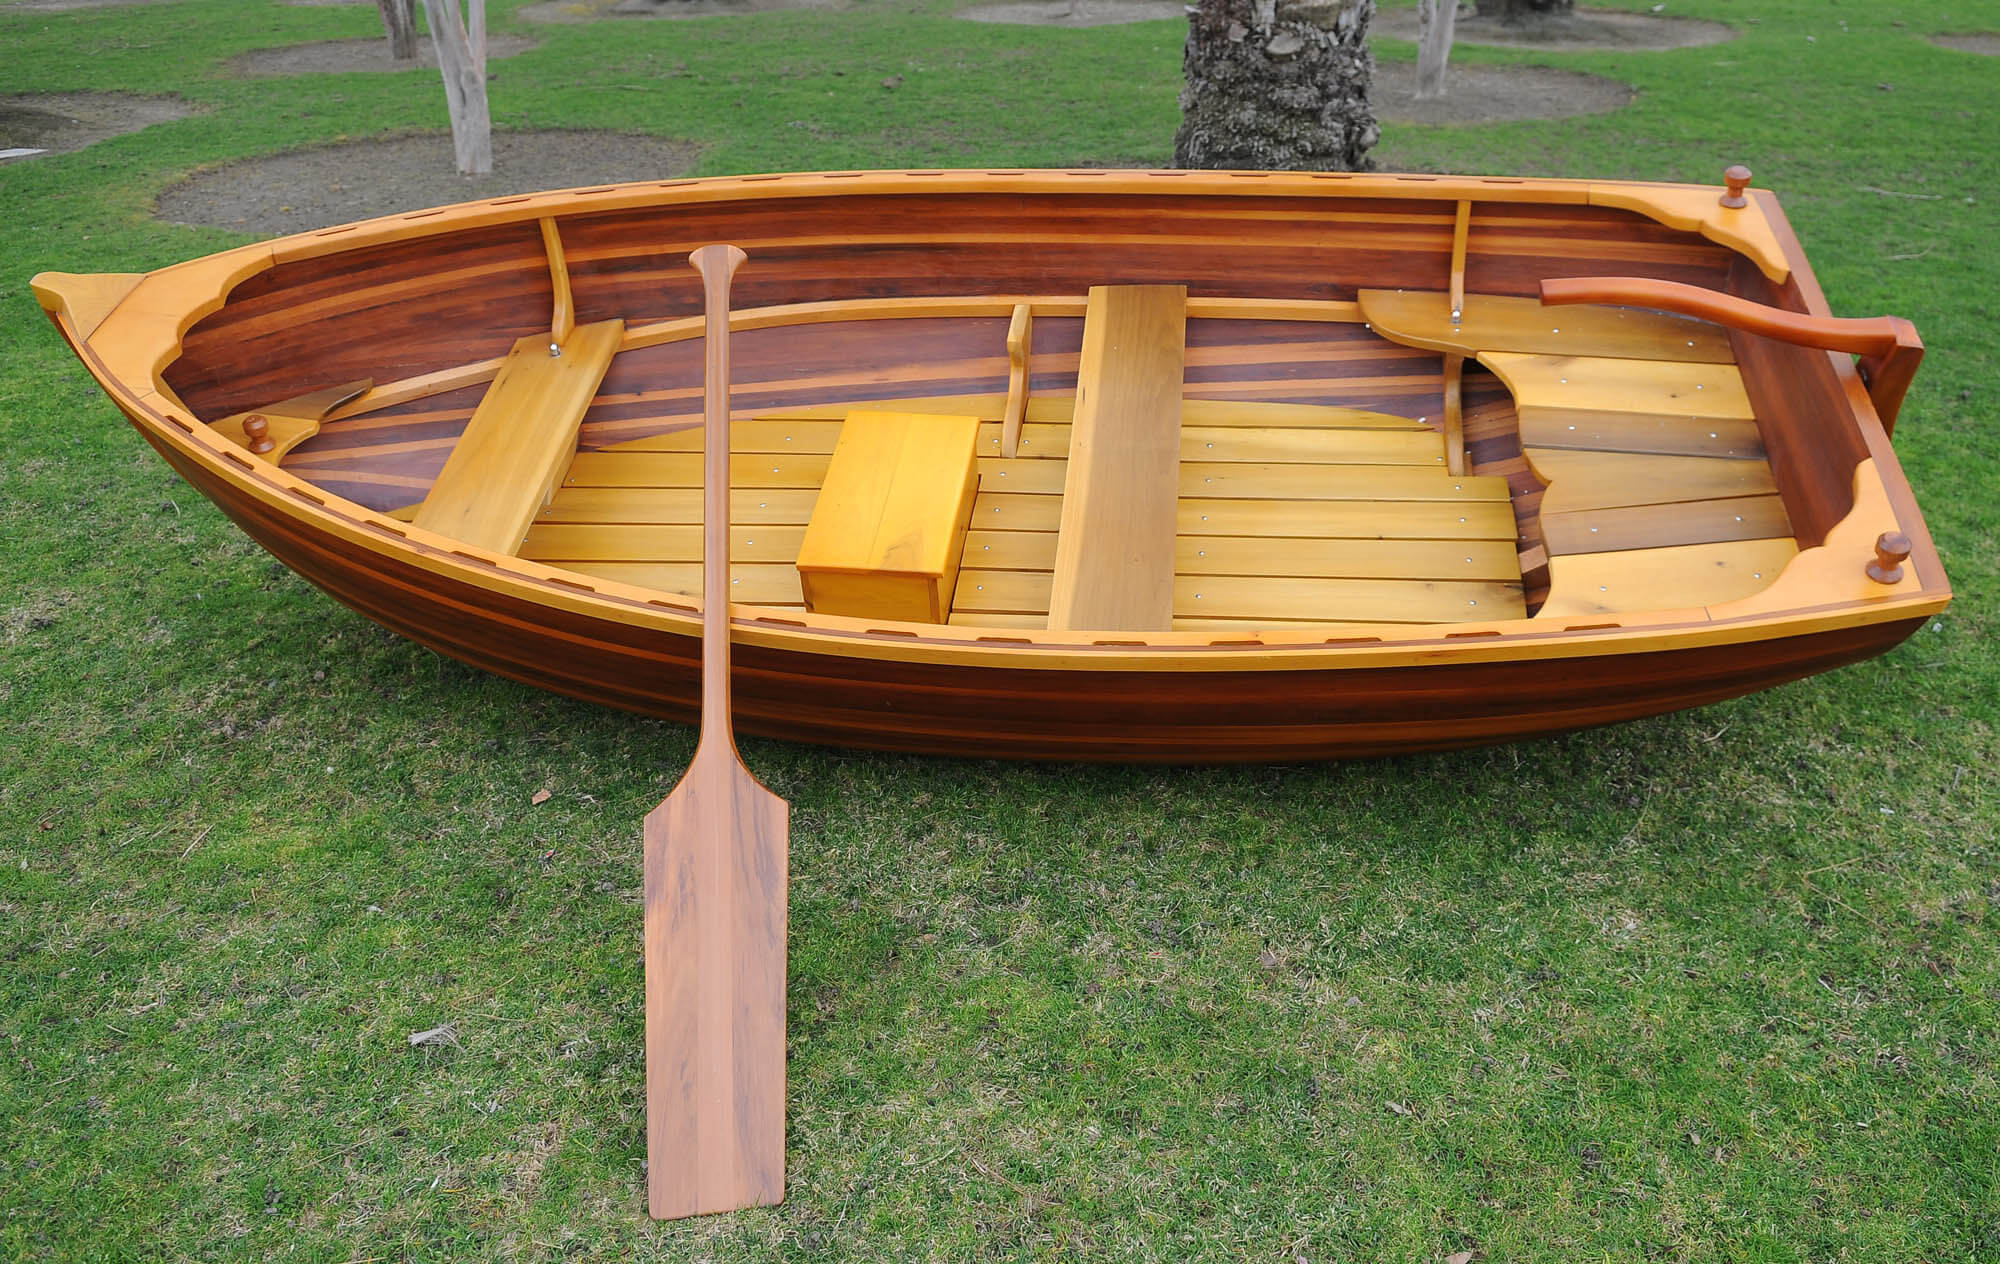 Shop little bear wooden dinghy matte finish - Wooden Boat USA